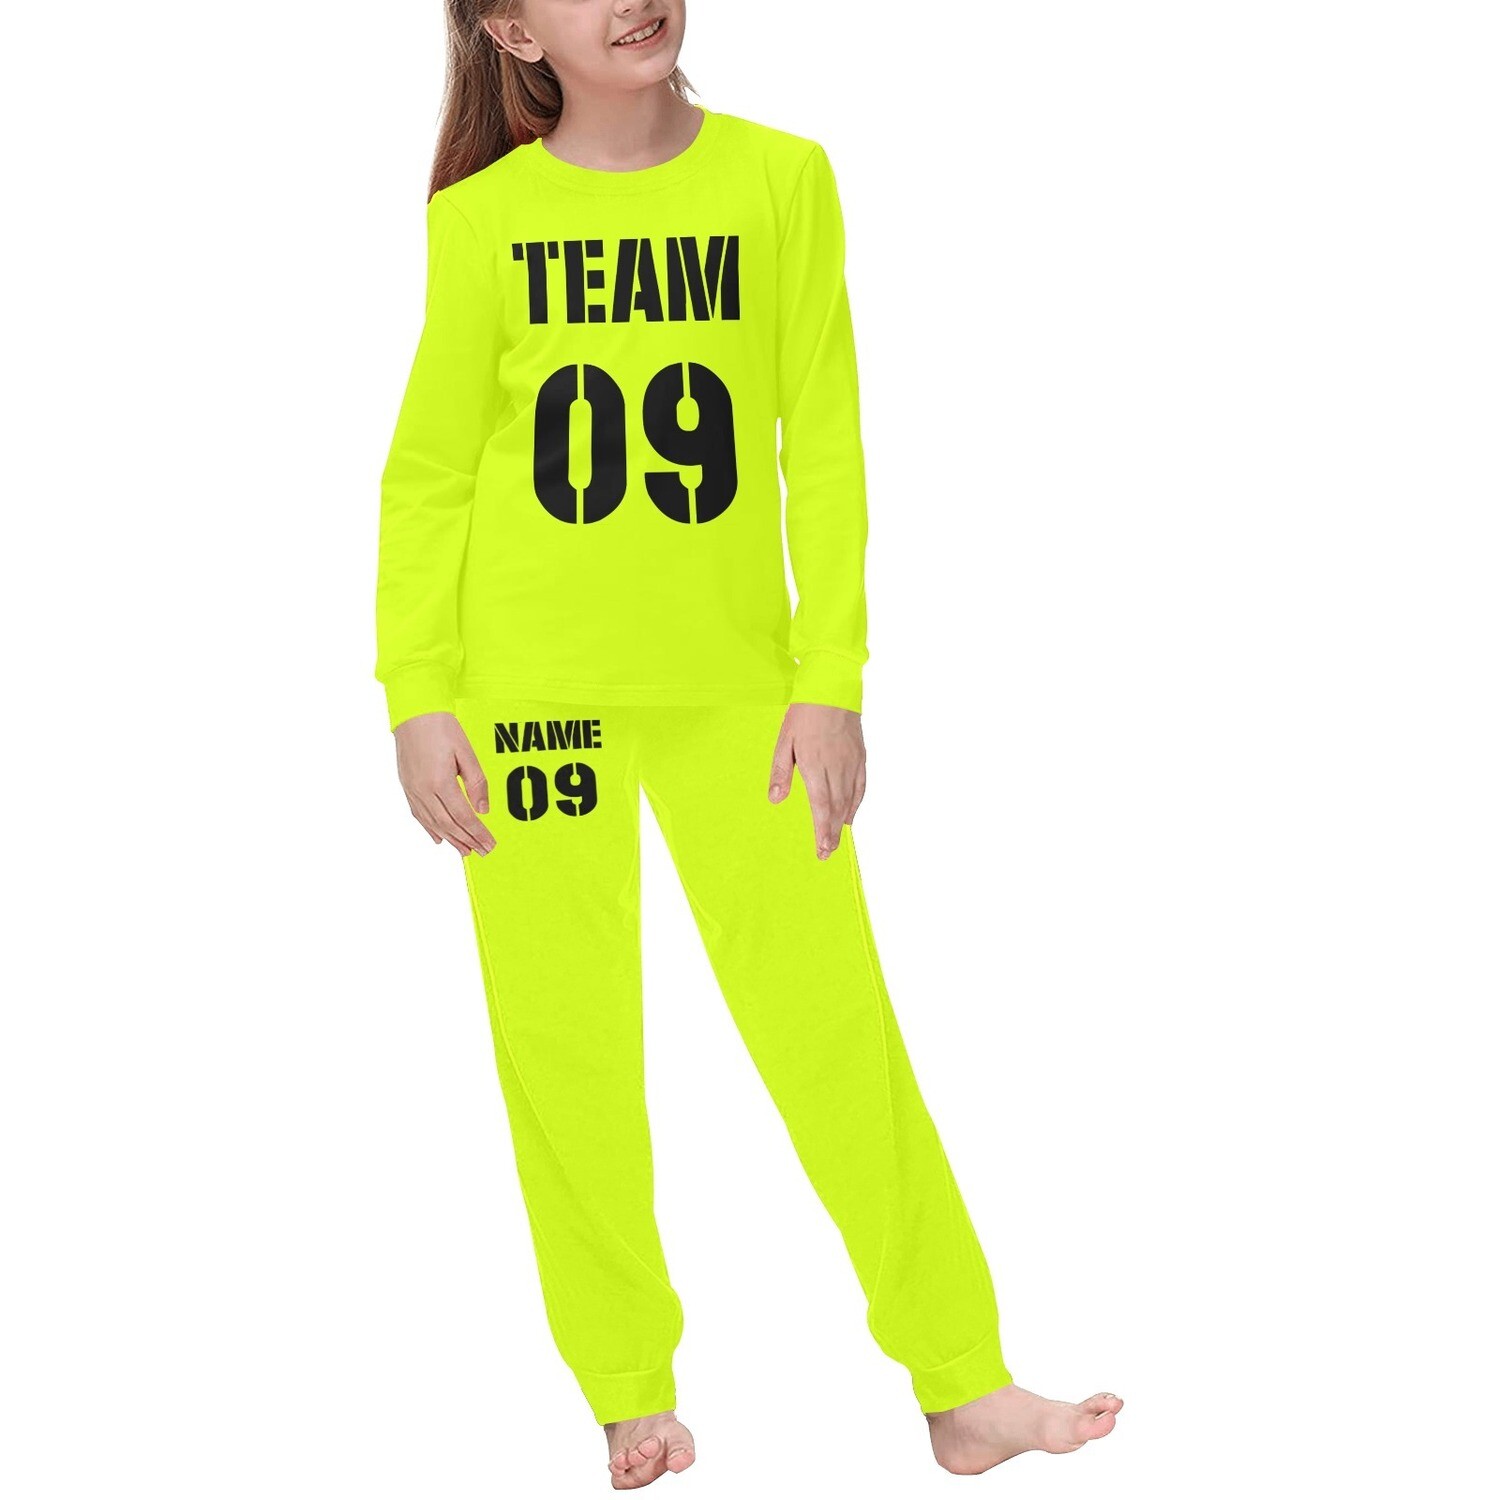 👸🏽🤴🏽 Custom Team Pajama Set for Kids, Kids' Personalized Pajamas, custom design your own Pjs, sleepwear, loungewear, Sports Uniform, add Team, Name, Number